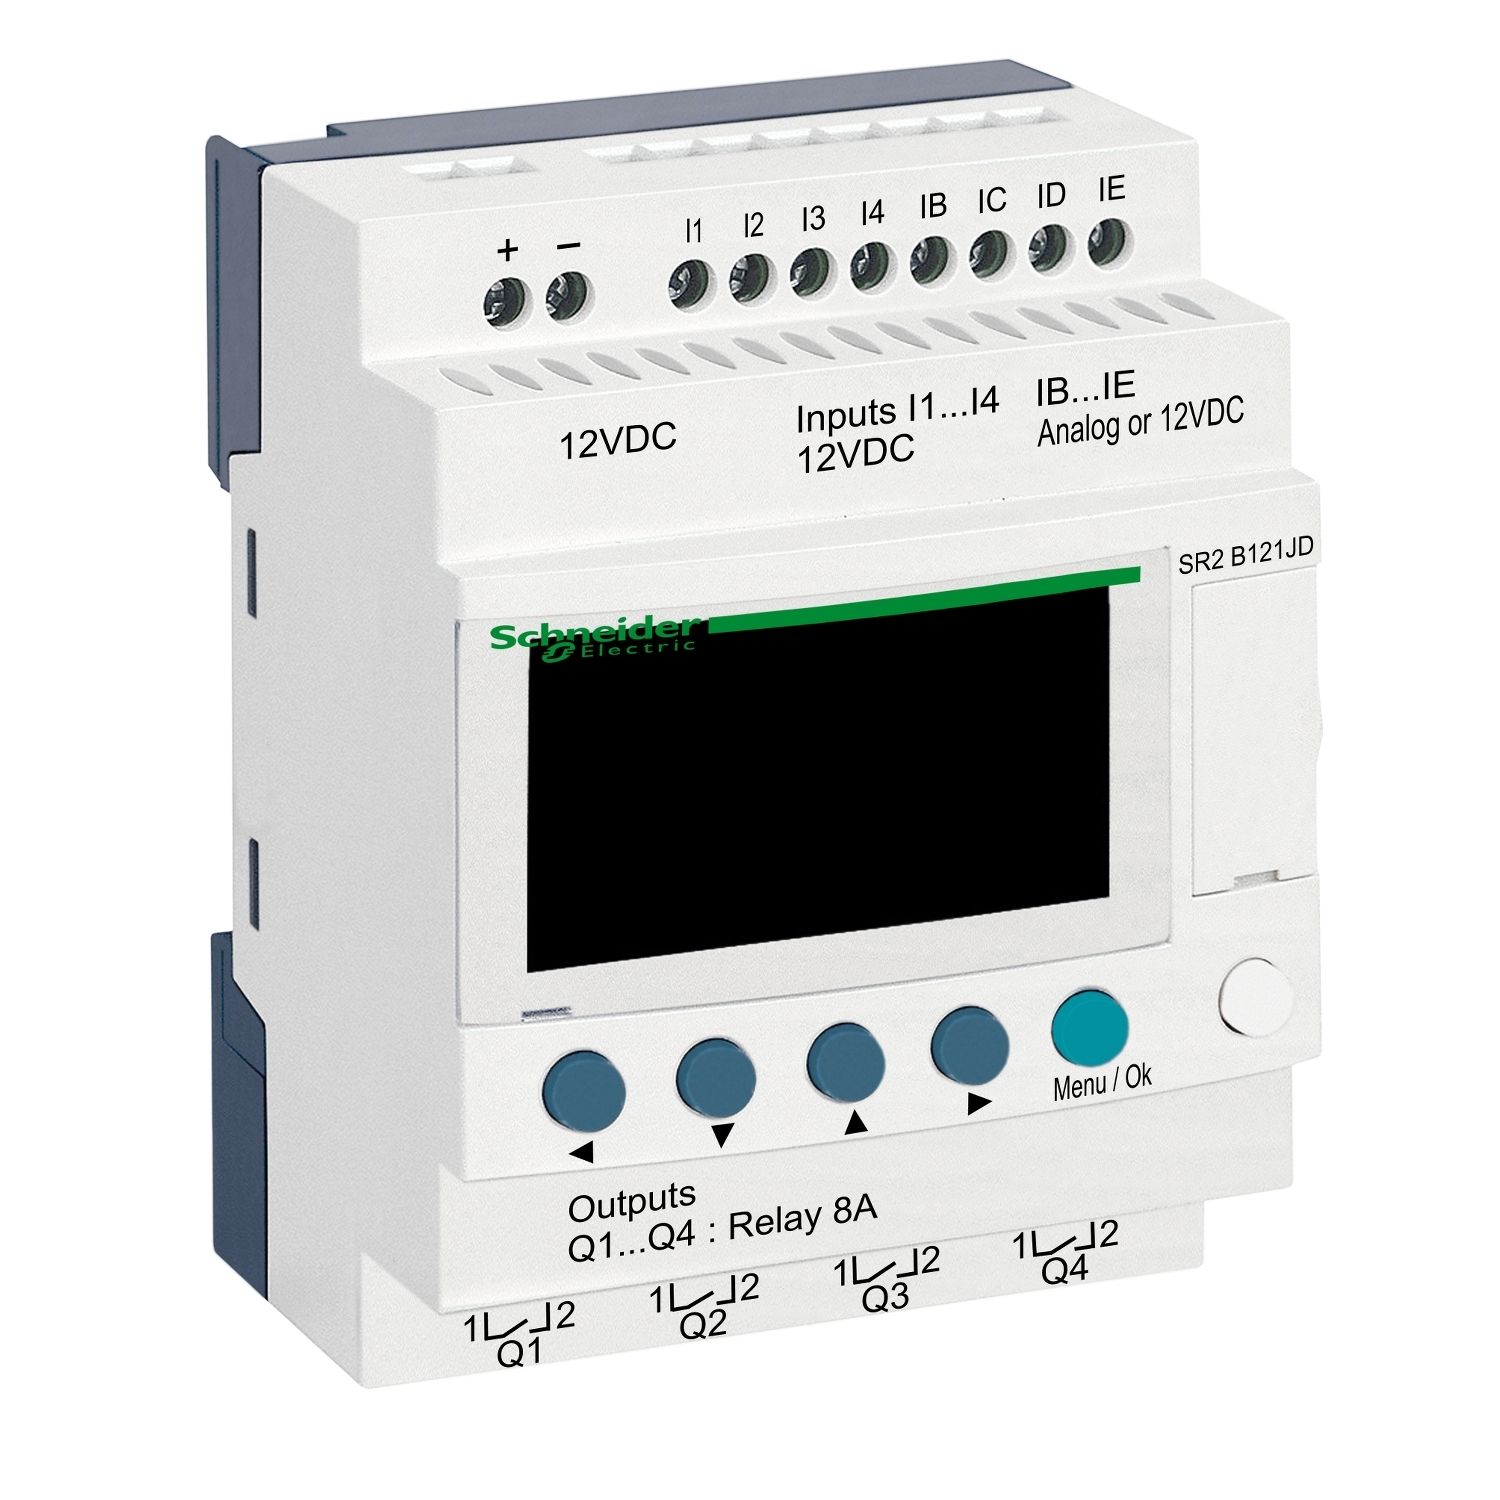 SR2B121JD Compact smart relay, Zelio Logic, 12 I/O, 12 V DC, clock, display